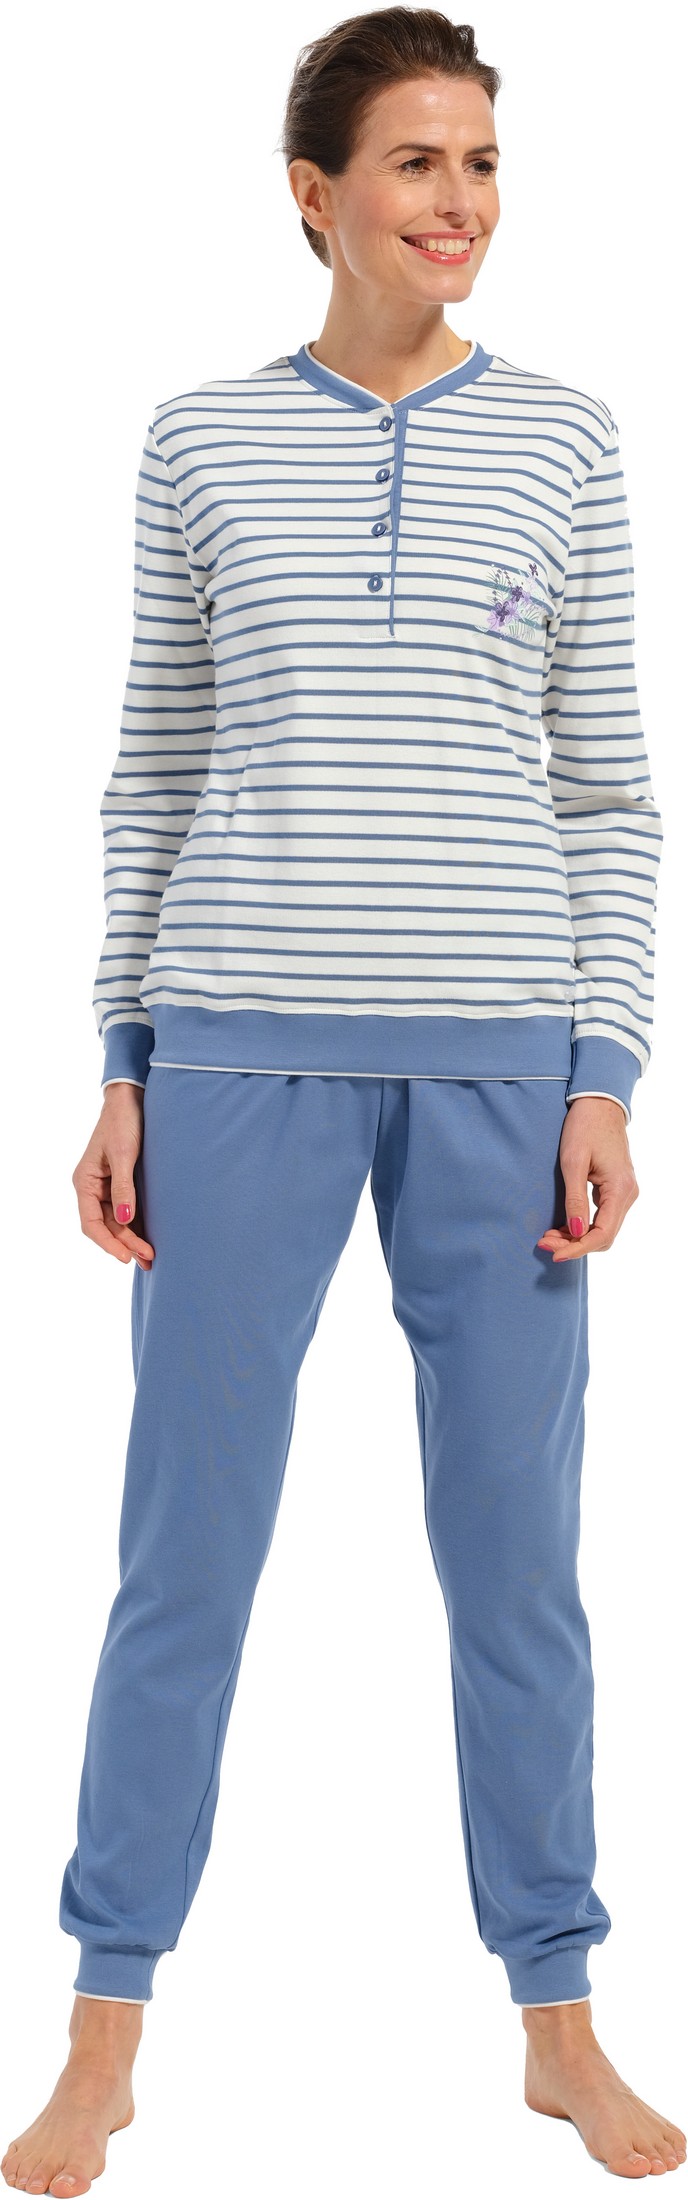 Pastunette dames pyjama katoen 20232-172-4 - Blauw - 52